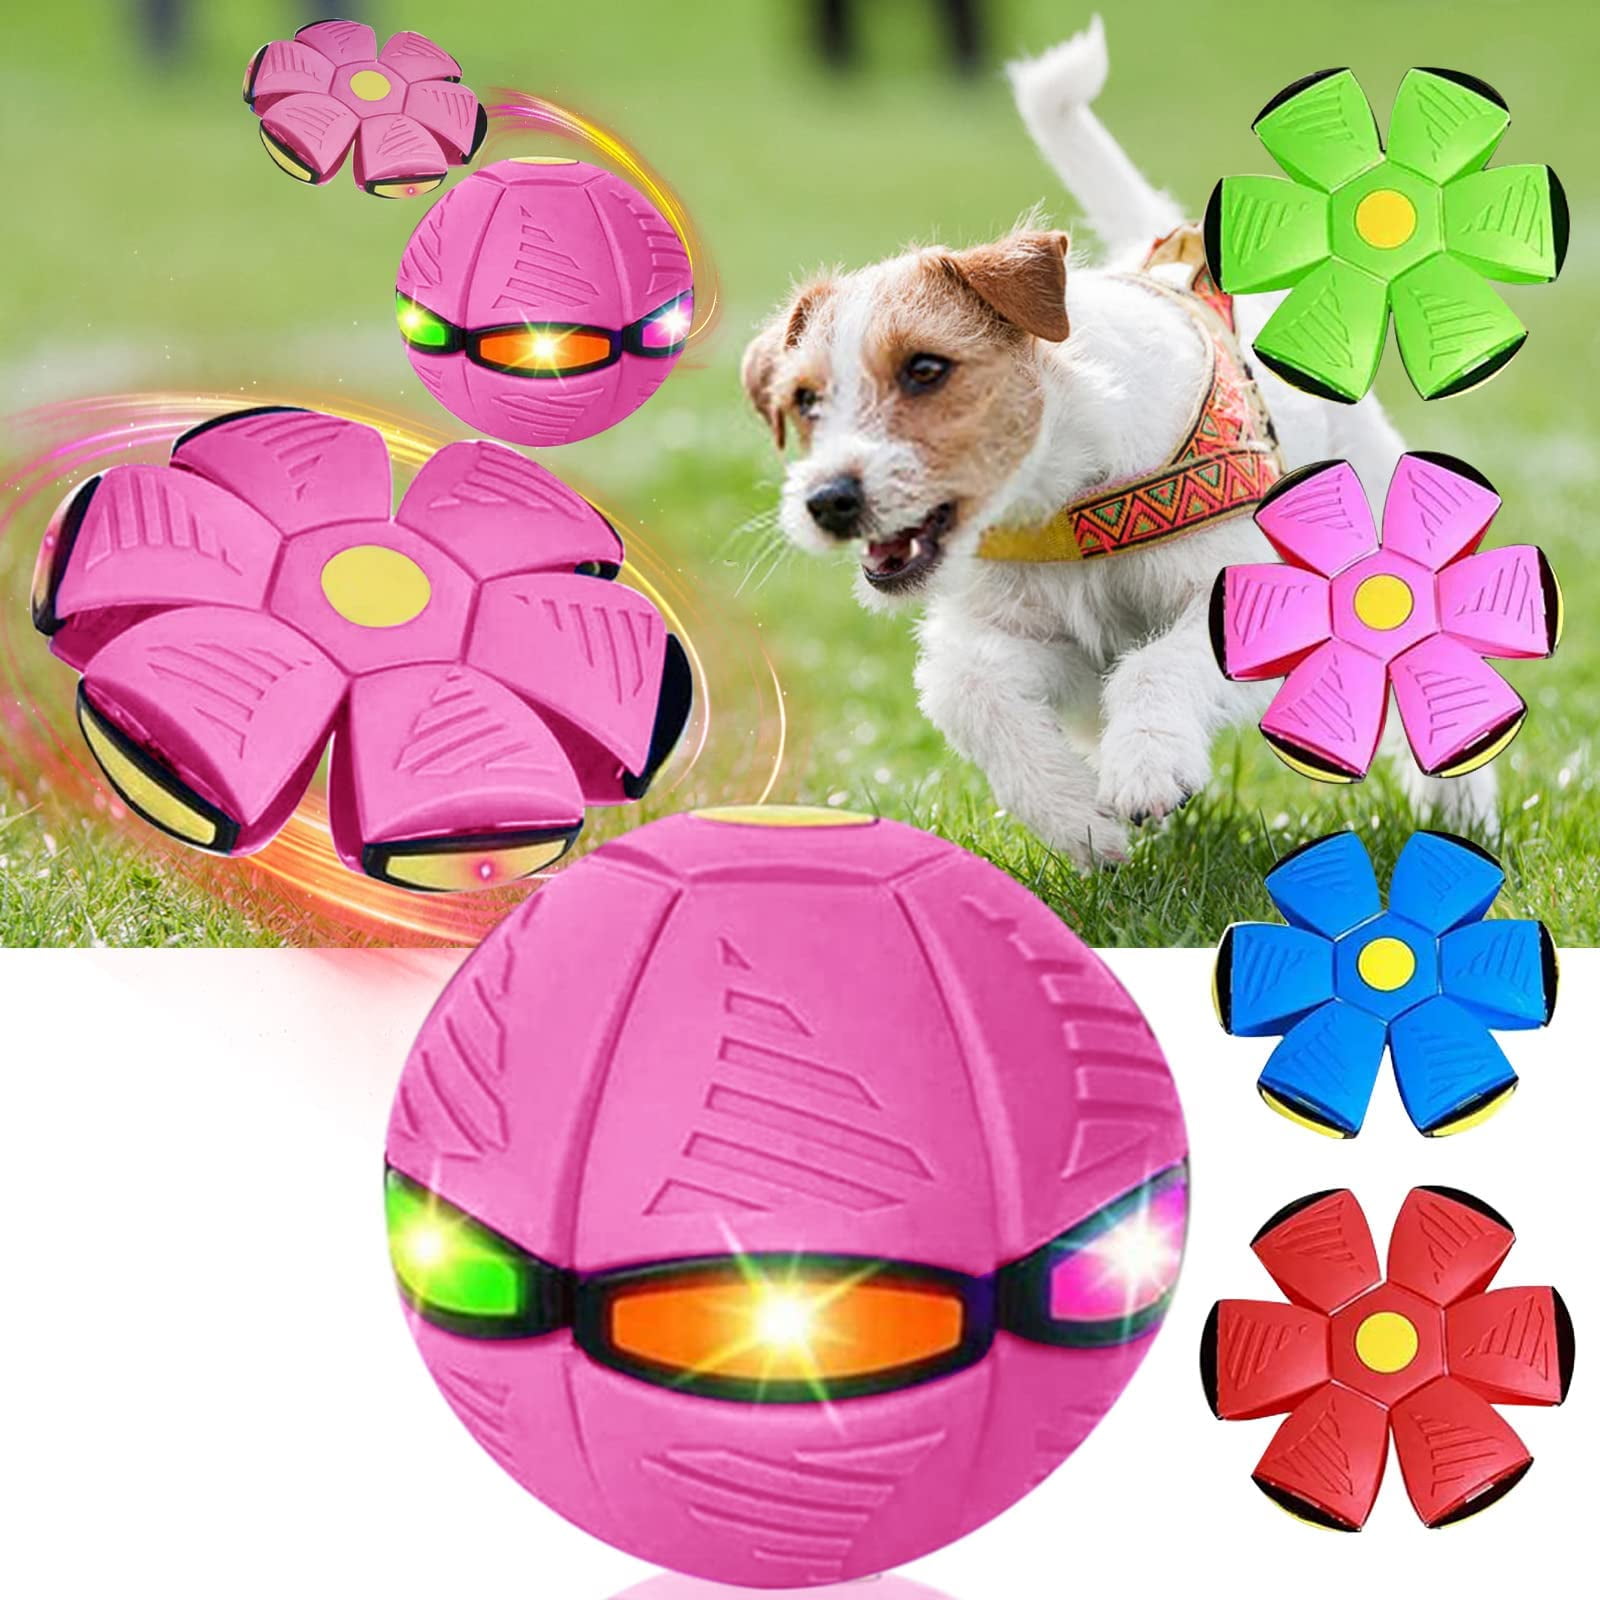 UFO Magic Ball  Soft plastic, Gifts for kids, Ball